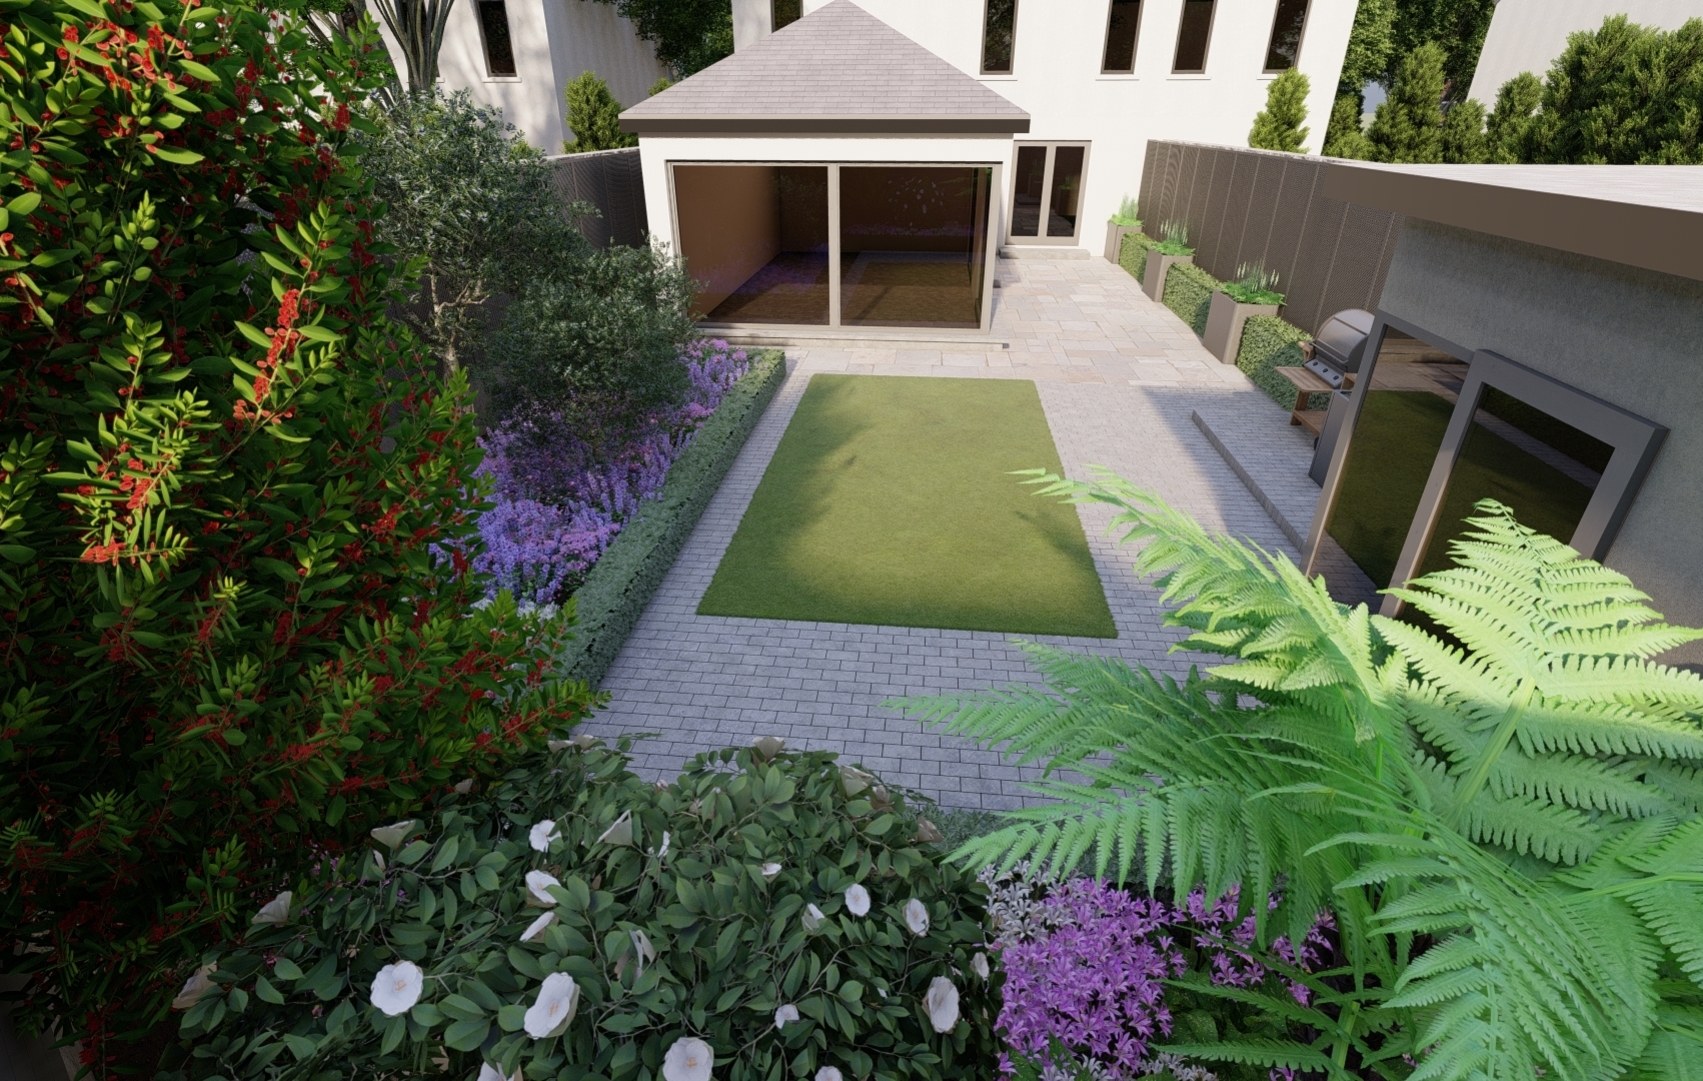 Terenure Garden design features bespoke fencing, Biohort Equipment Locker, BBQ area, Limstone patio paving, Buxus Hedging, colourful Herbaceous borders |   Owen Chubb Garden Design, Tel 087-2306 128